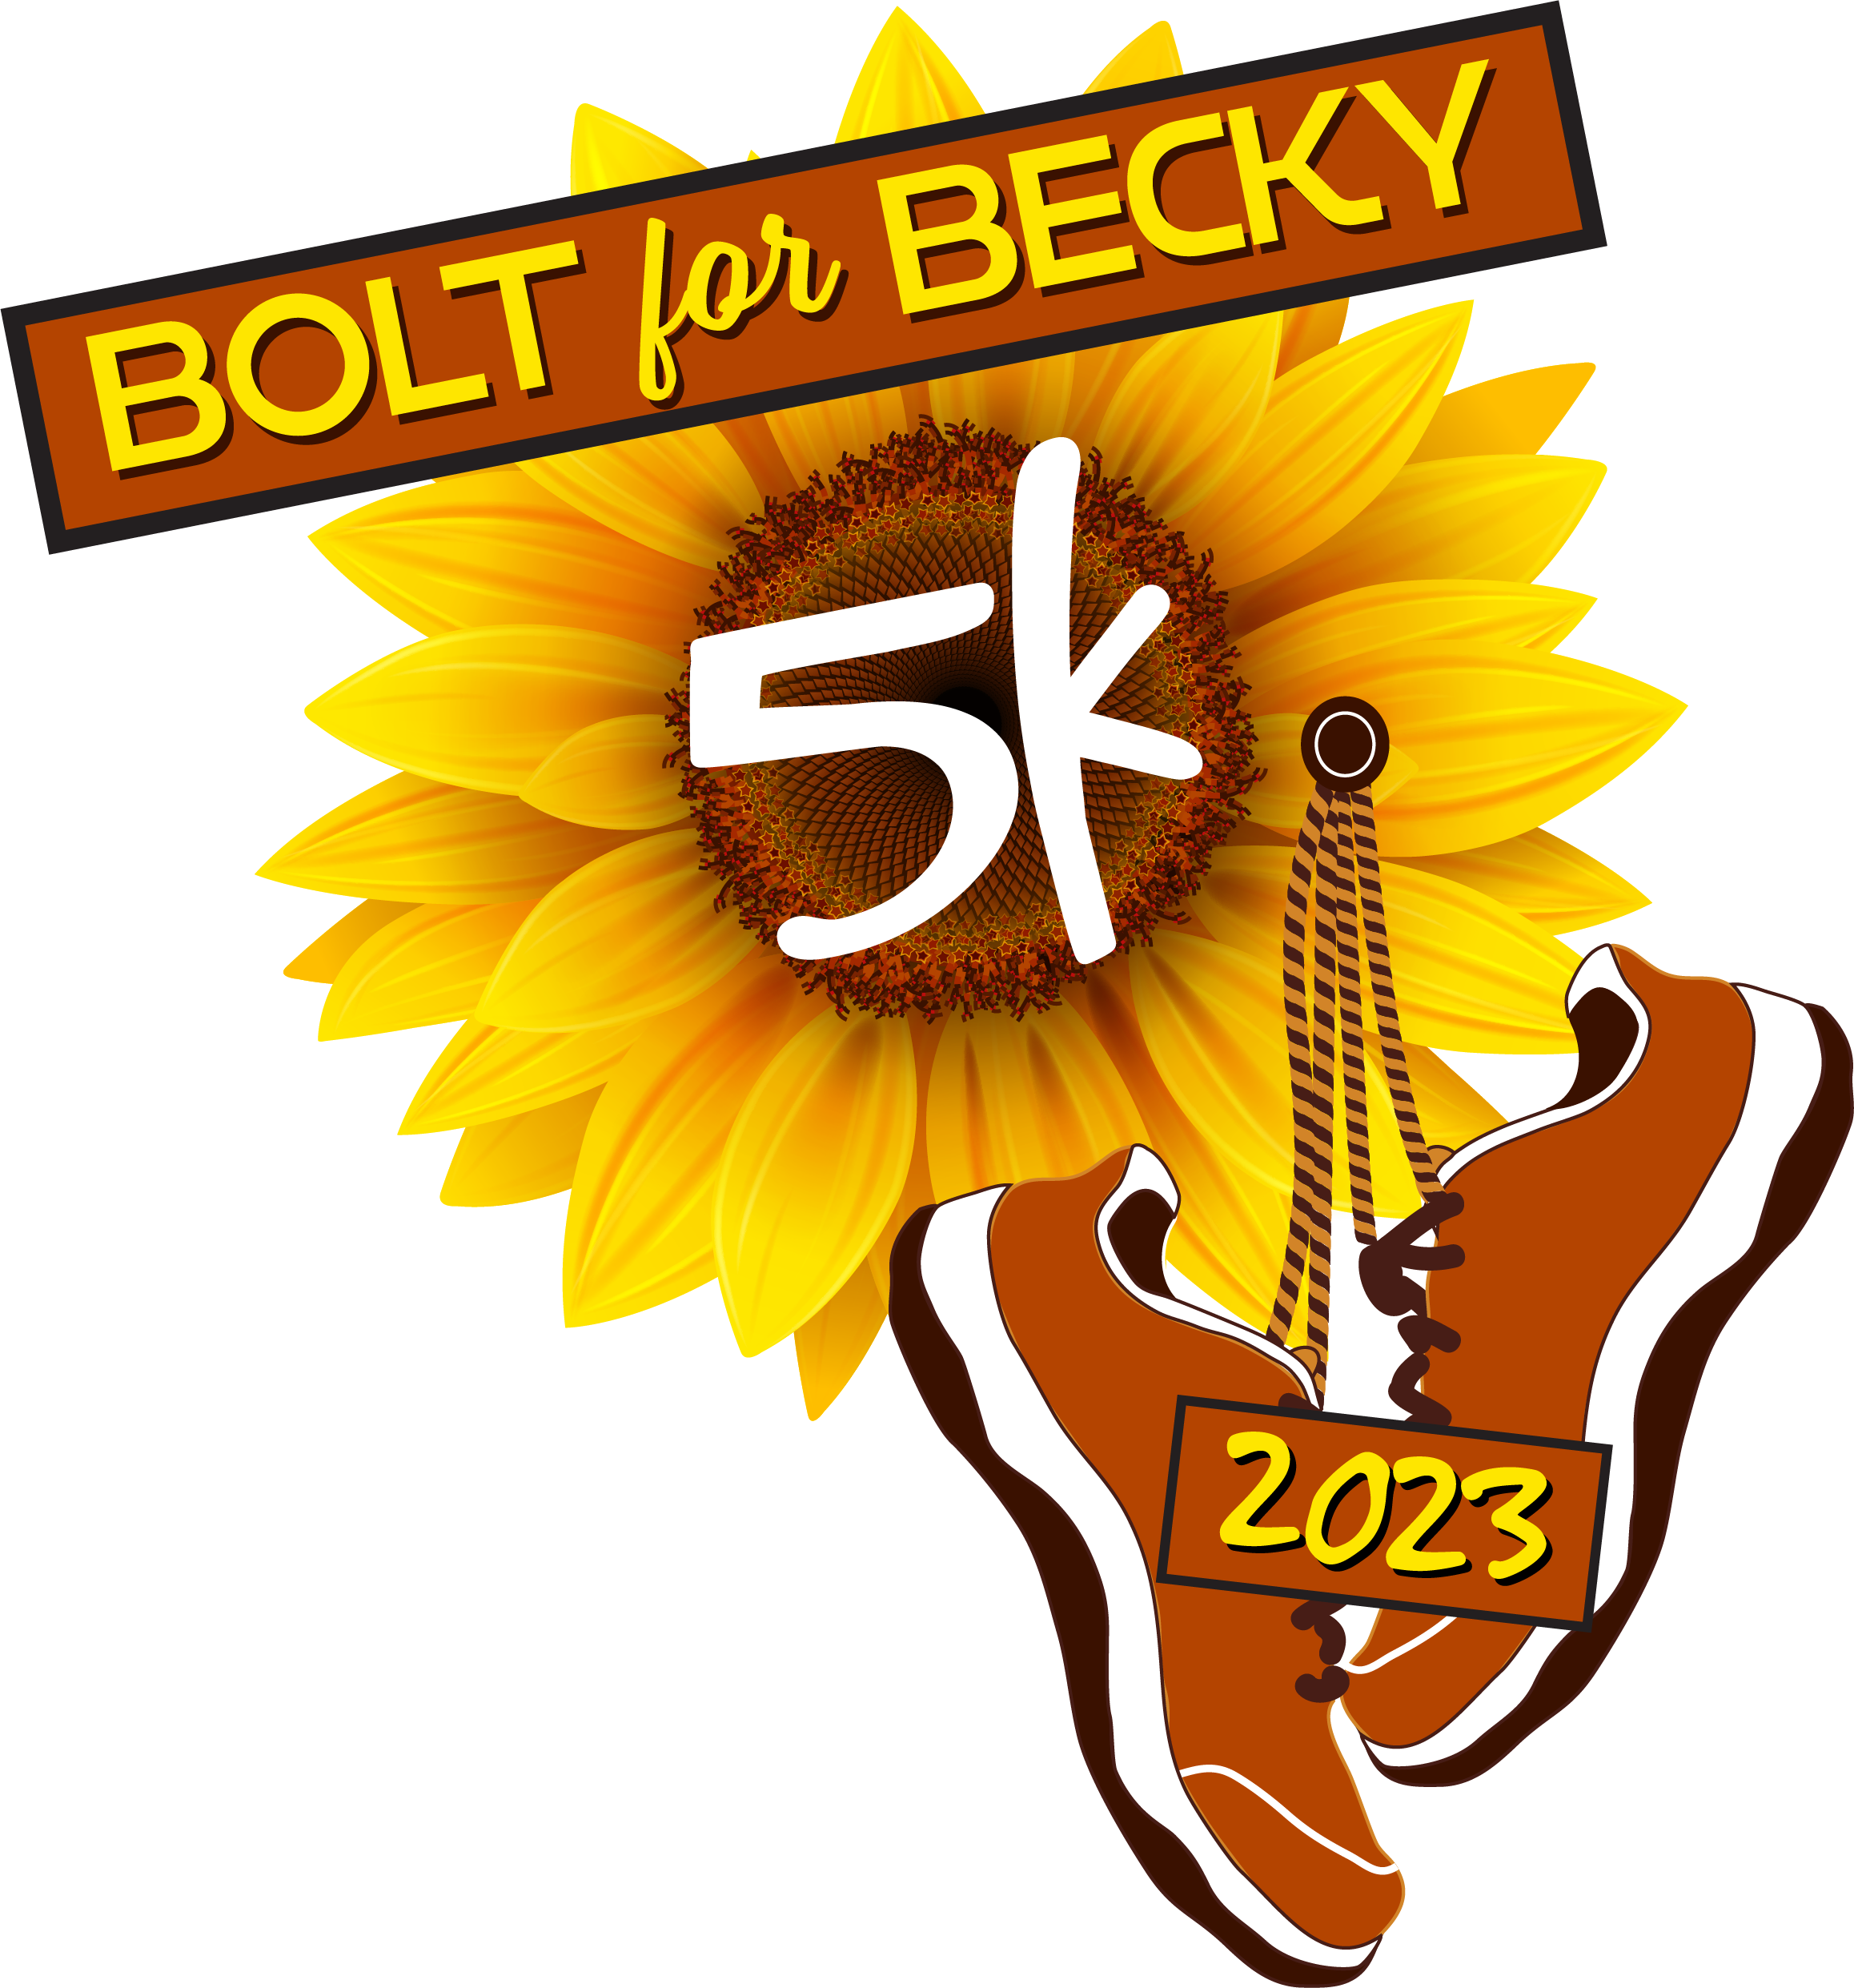 Bolt for Beck charity race event logo